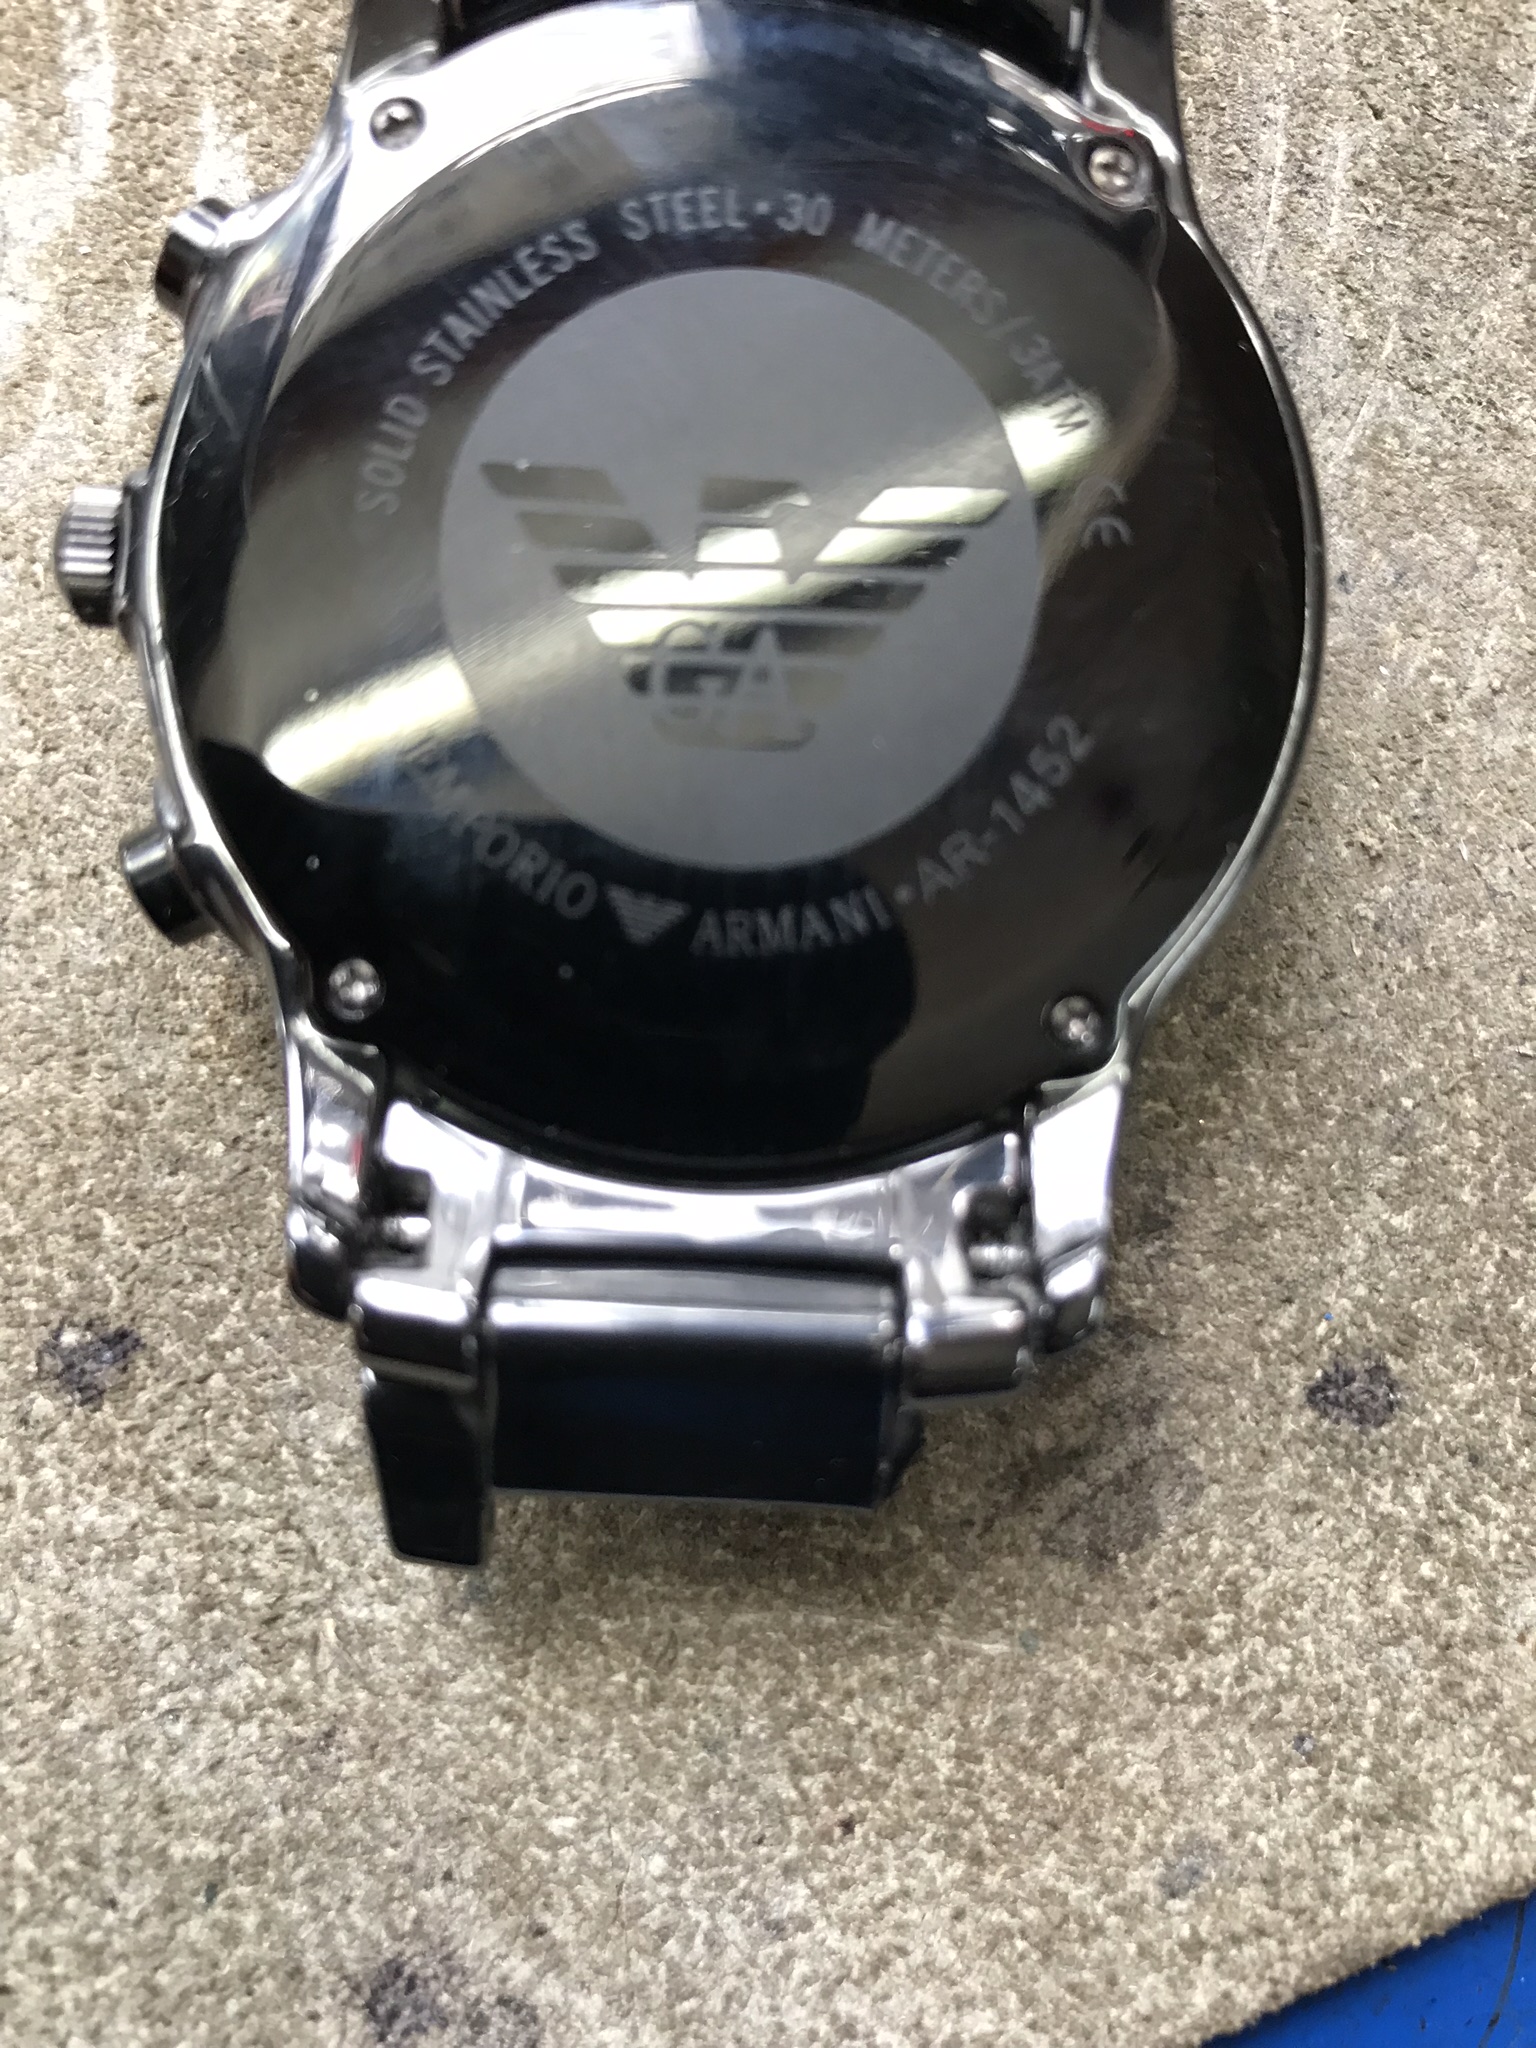 armani ceramic watch strap broken